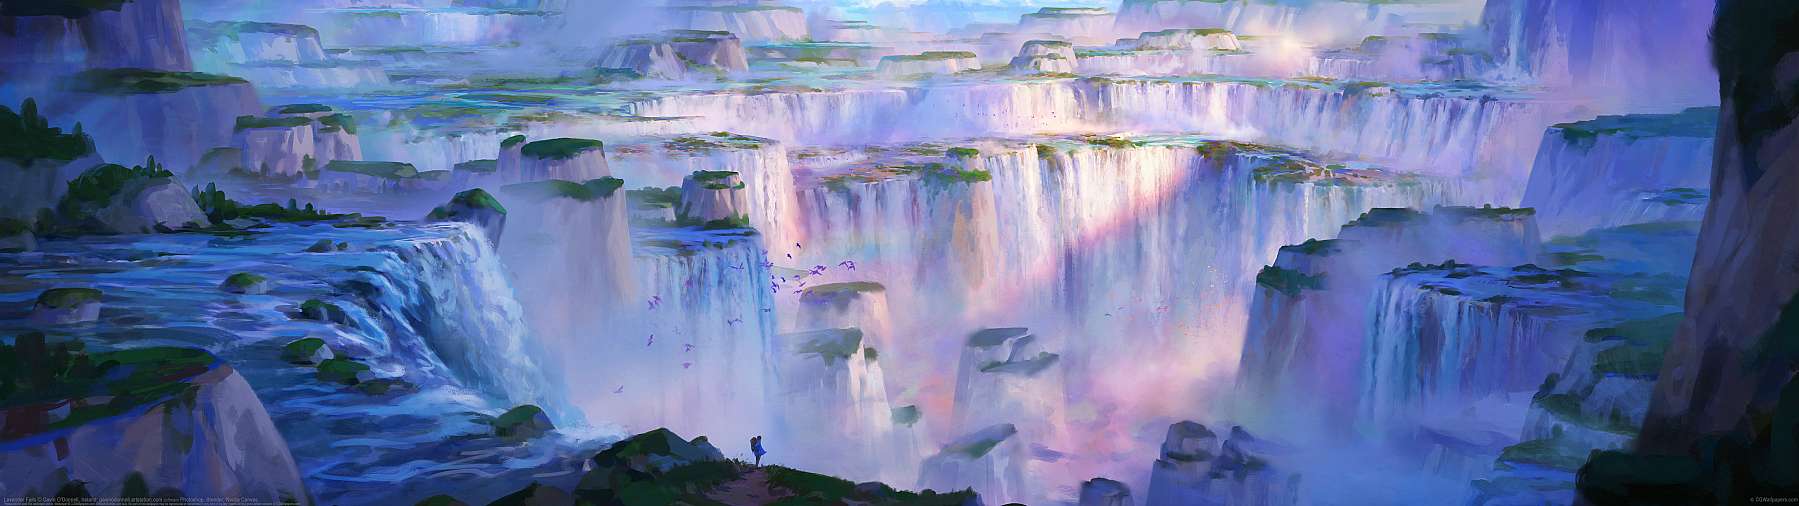 Lavender Falls ultrawide achtergrond